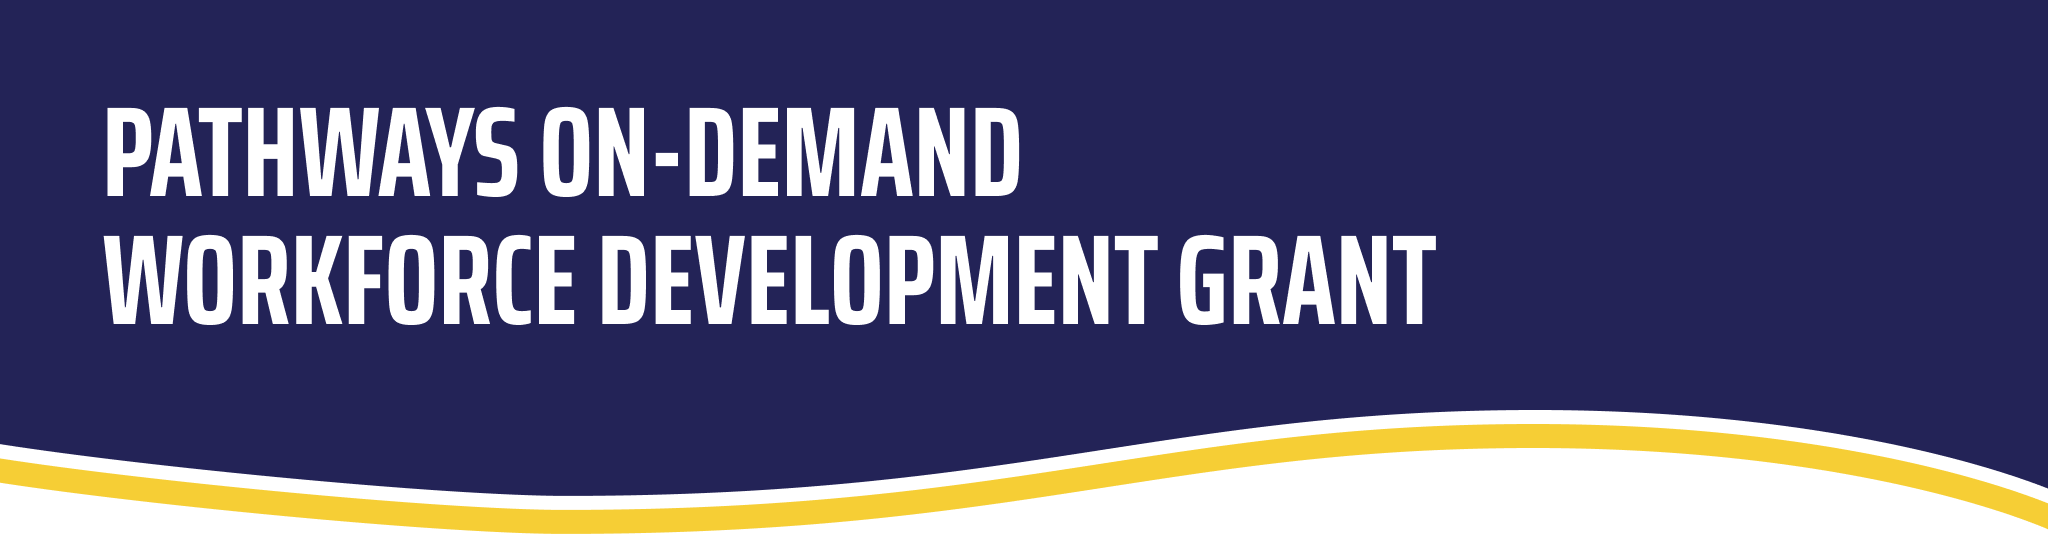 Header with page title Pathways On-Demand Workforce Development Grant